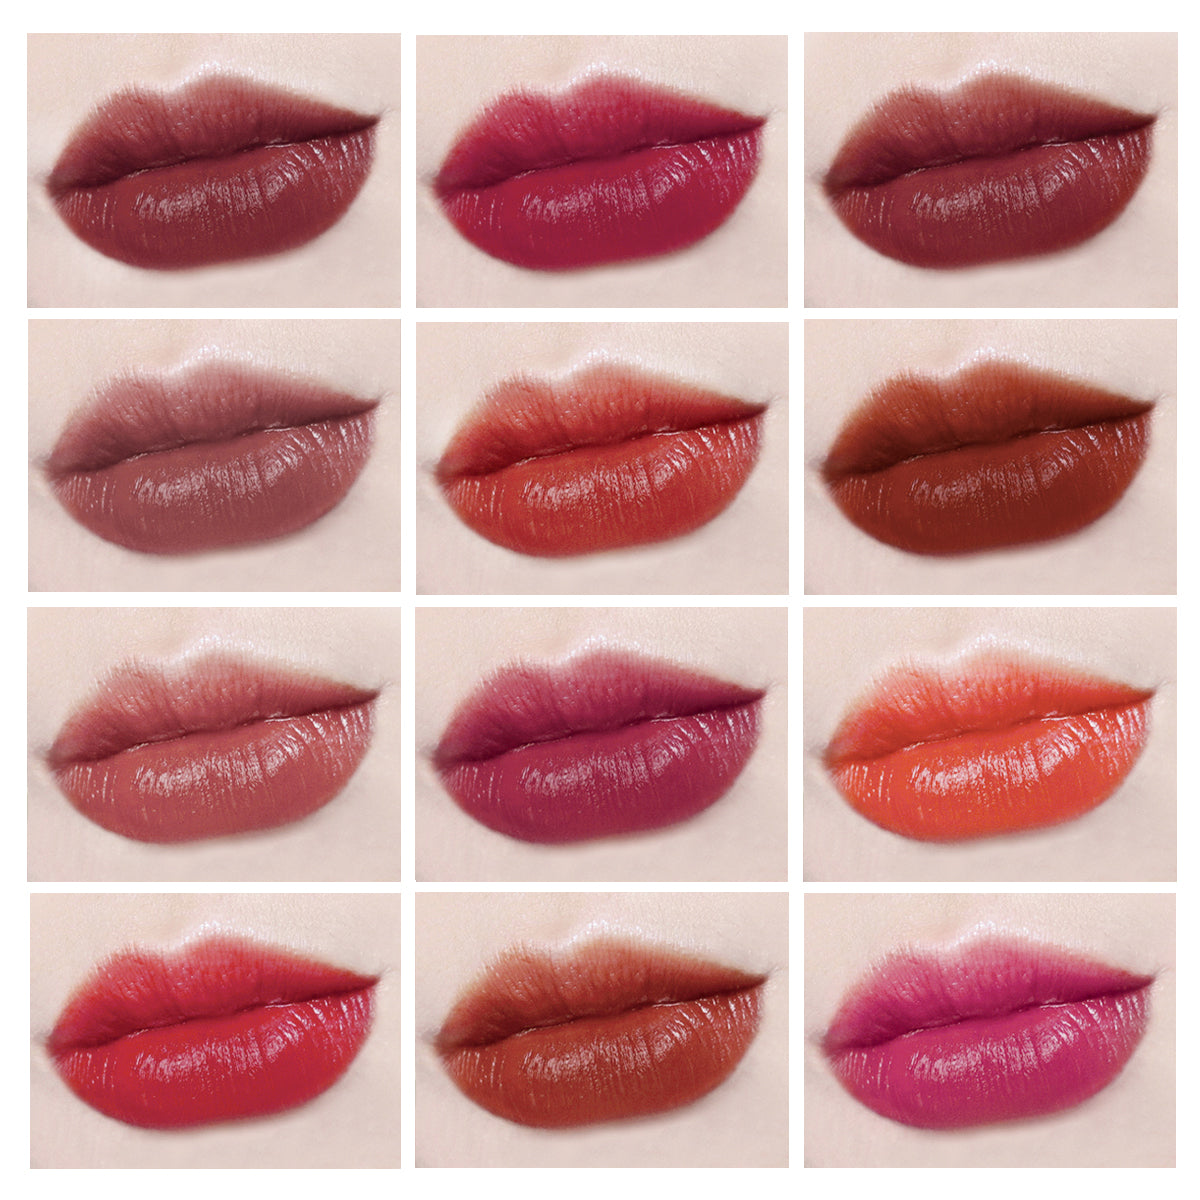  KISSIO Lipstick,Lipstick Set 12 Colors,Mini Matte